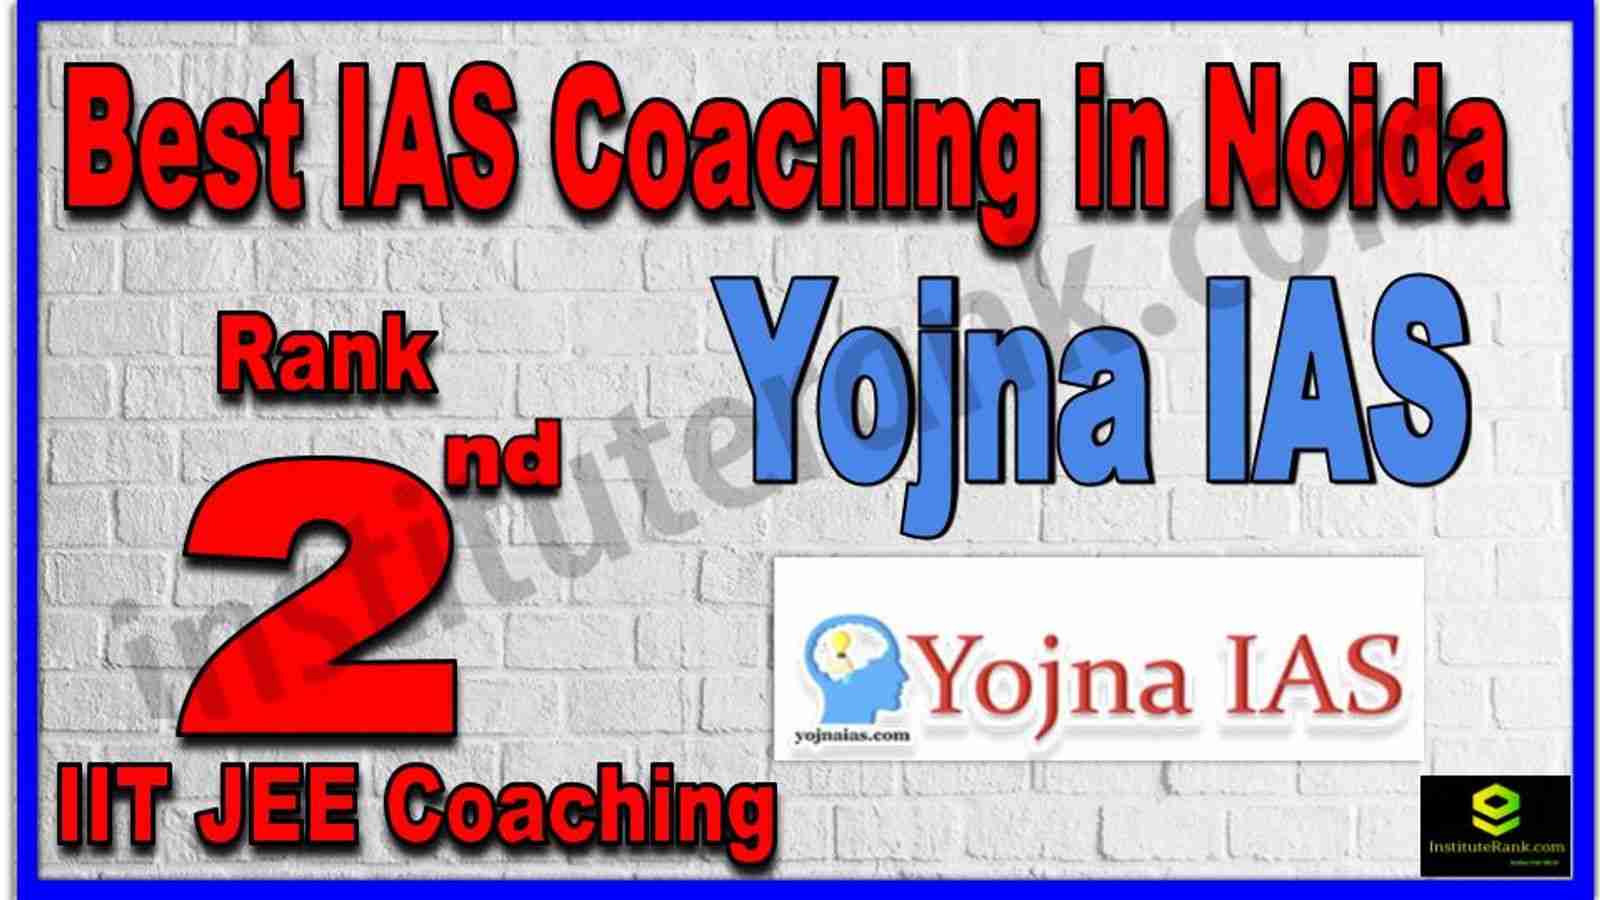 Rank 2nd Best IAS Coaching in Noida